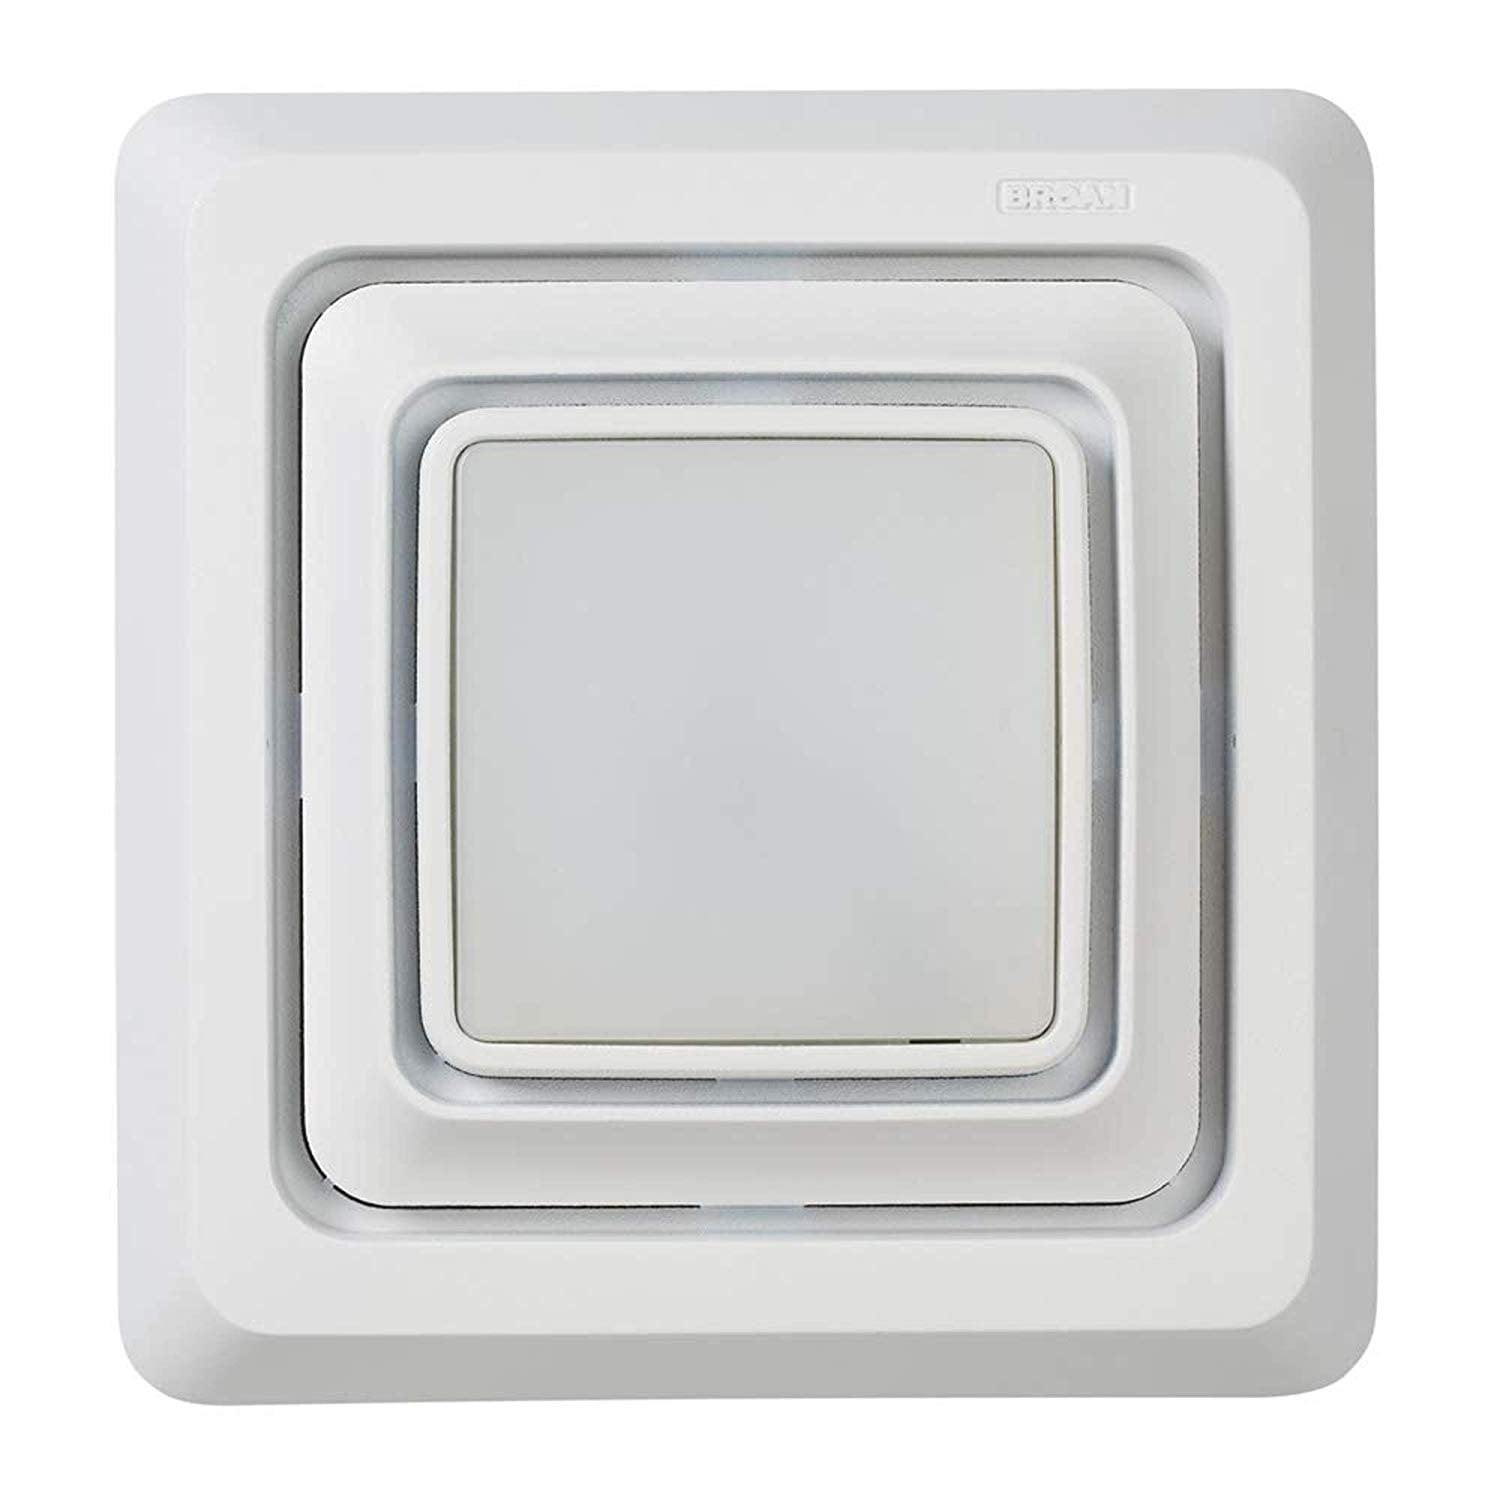 Broan-NuTone Broan FG600S LED Lighted Grille Upgrade for Bathroom  Ventilation Fans, Easy Installation for DIY, White